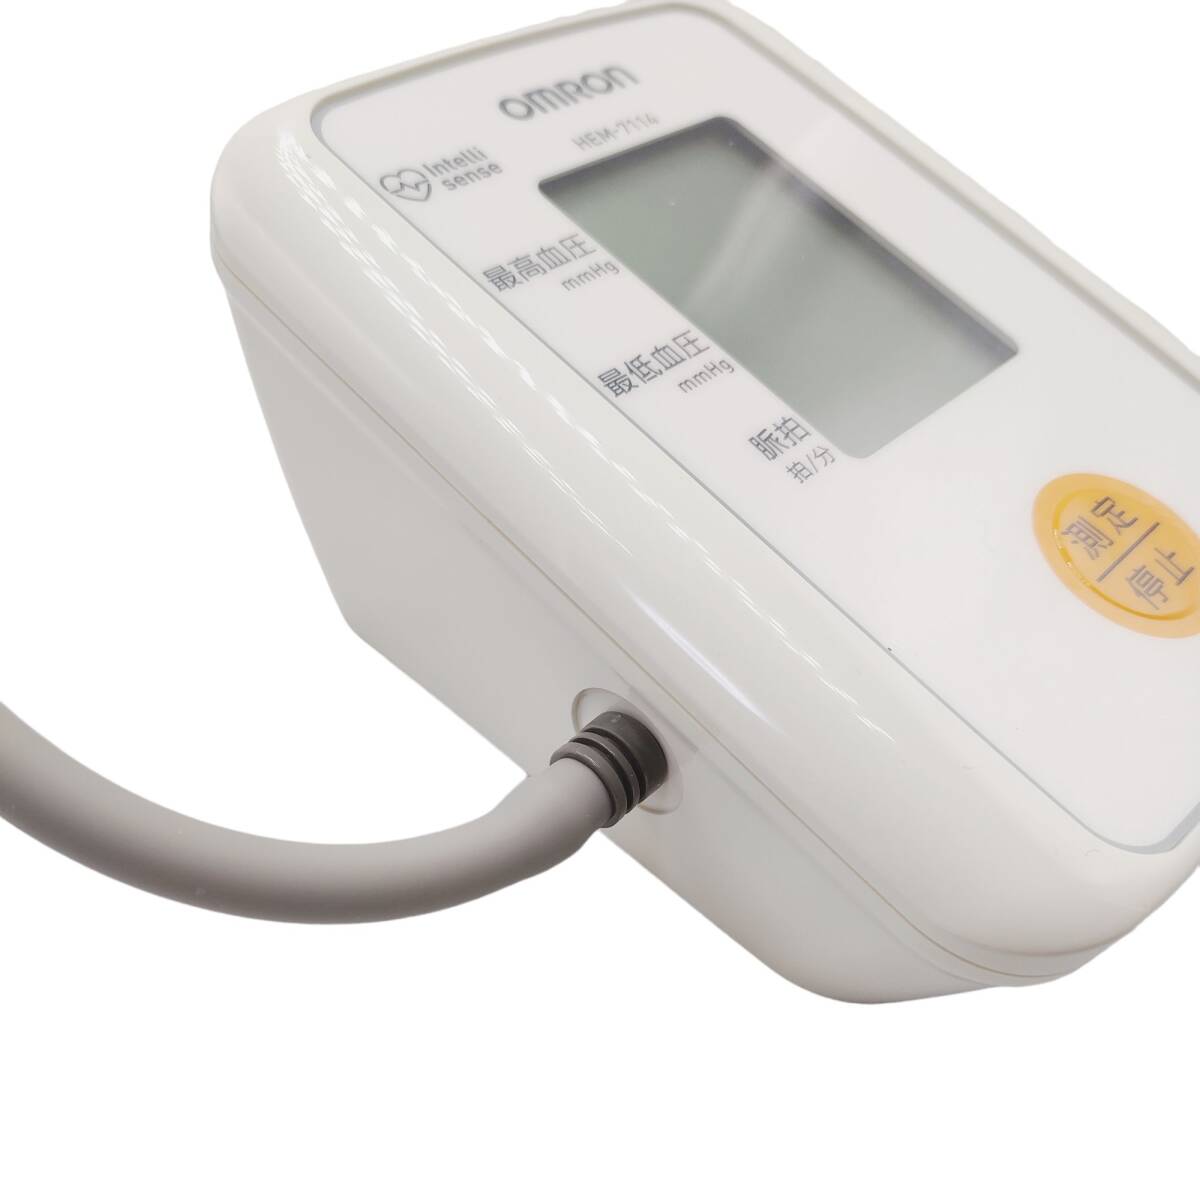 E05068 オムロン 自動血圧計 HEM-7114 自動電子血圧計 管理医療機器 EMC適合 ホワイト 白 単4形アルカリ乾電池4本使用 OMRON 収納袋付き_画像8